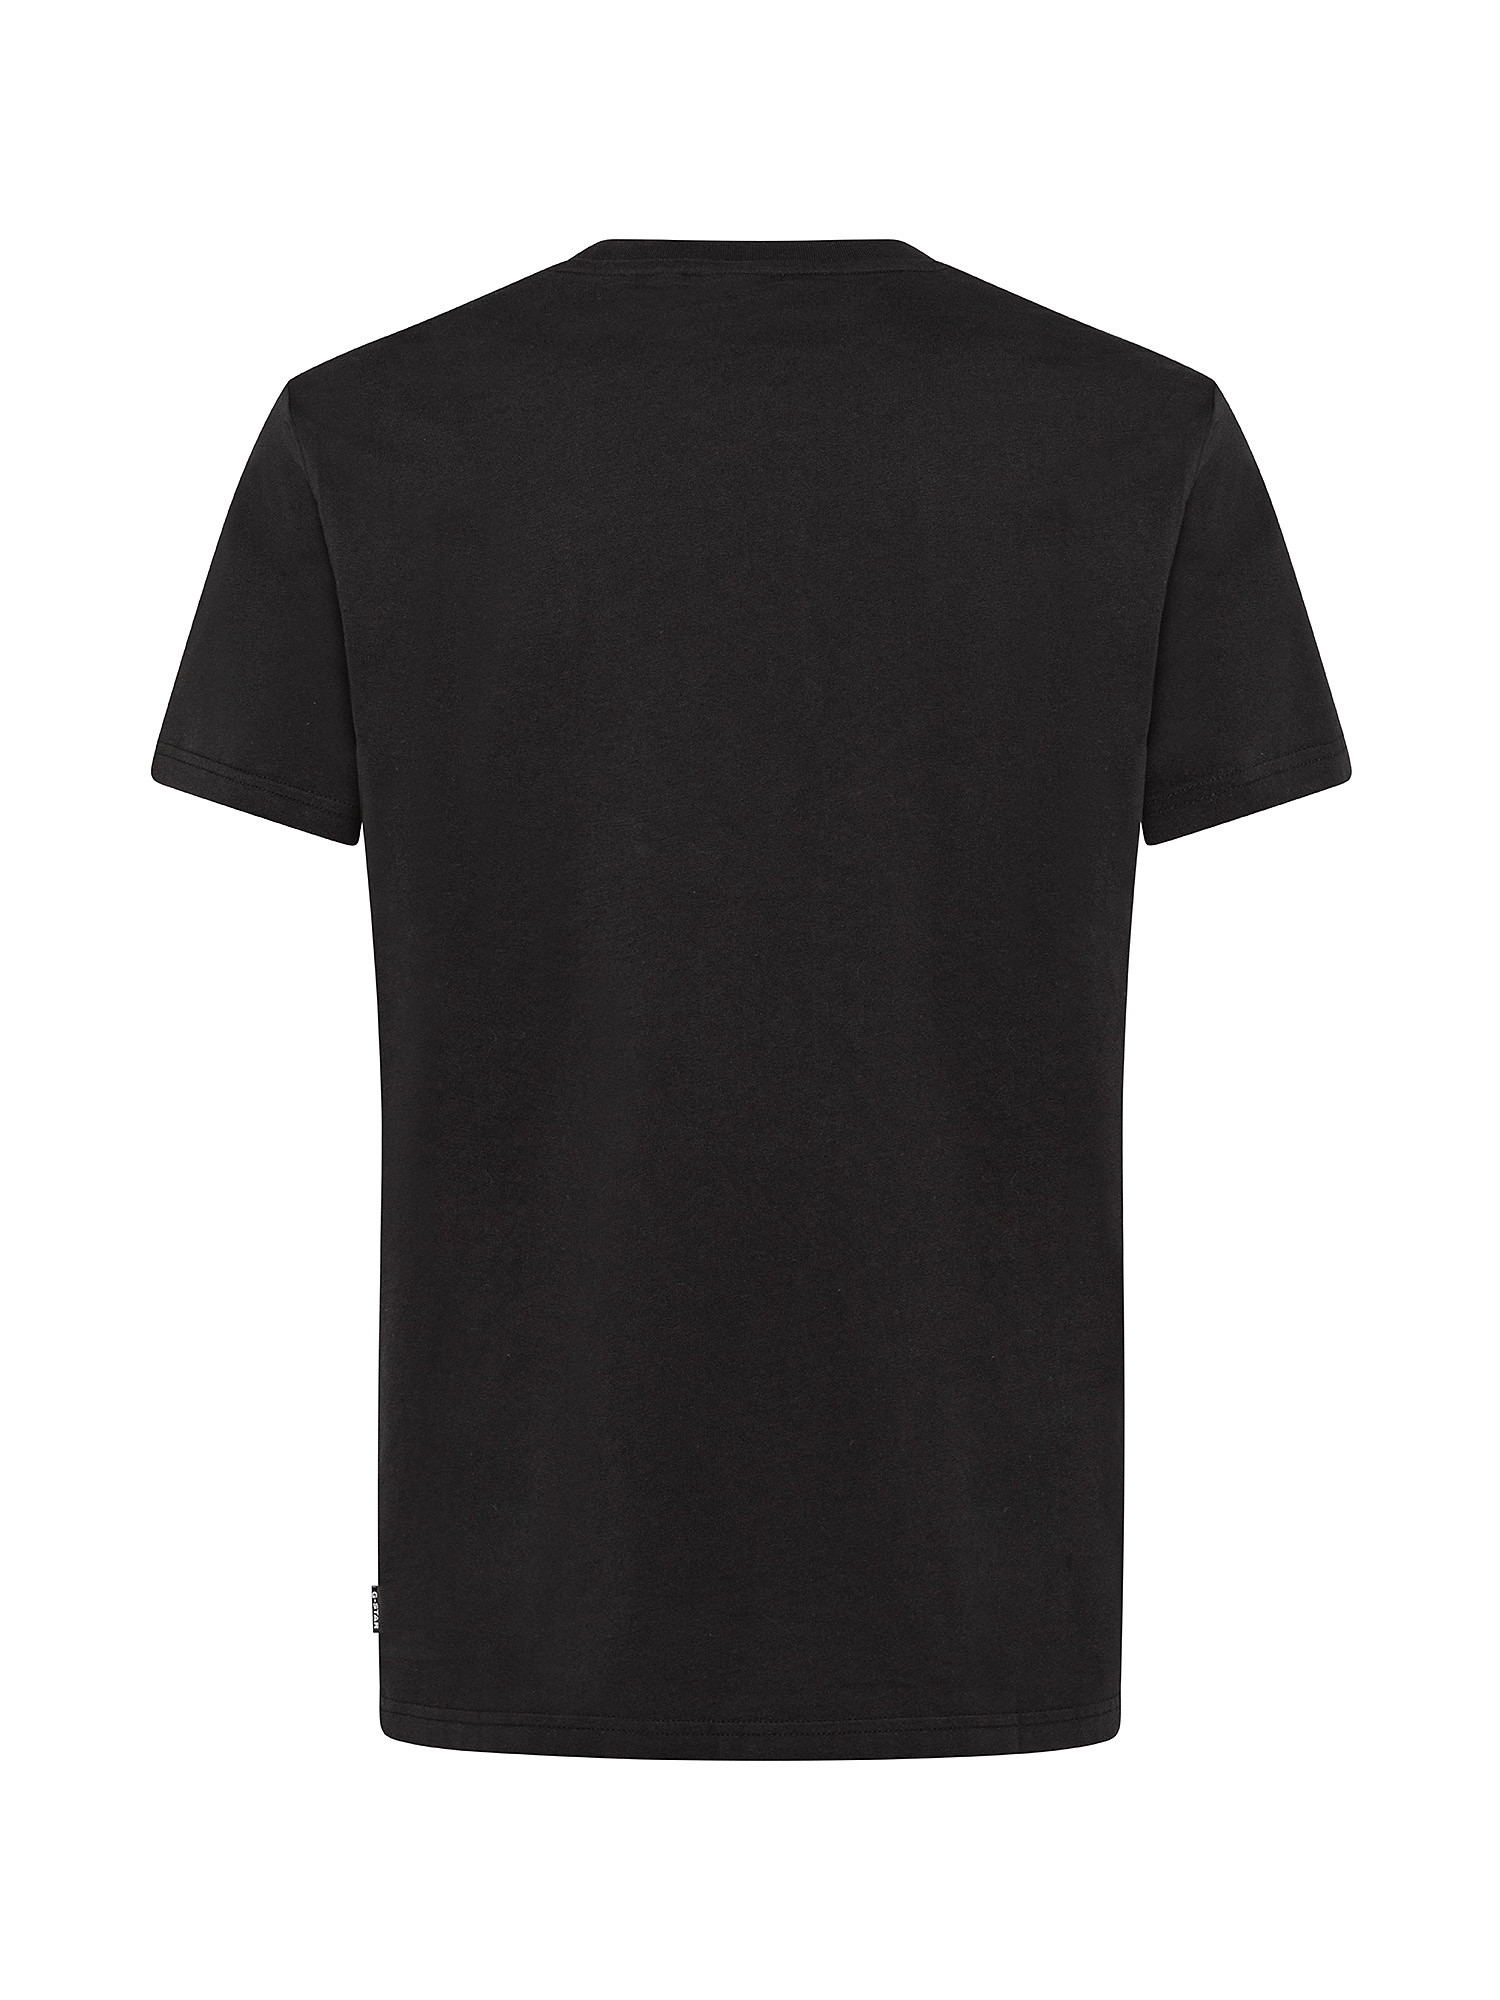 Raw slim graphic t-shirt, Black, large image number 1